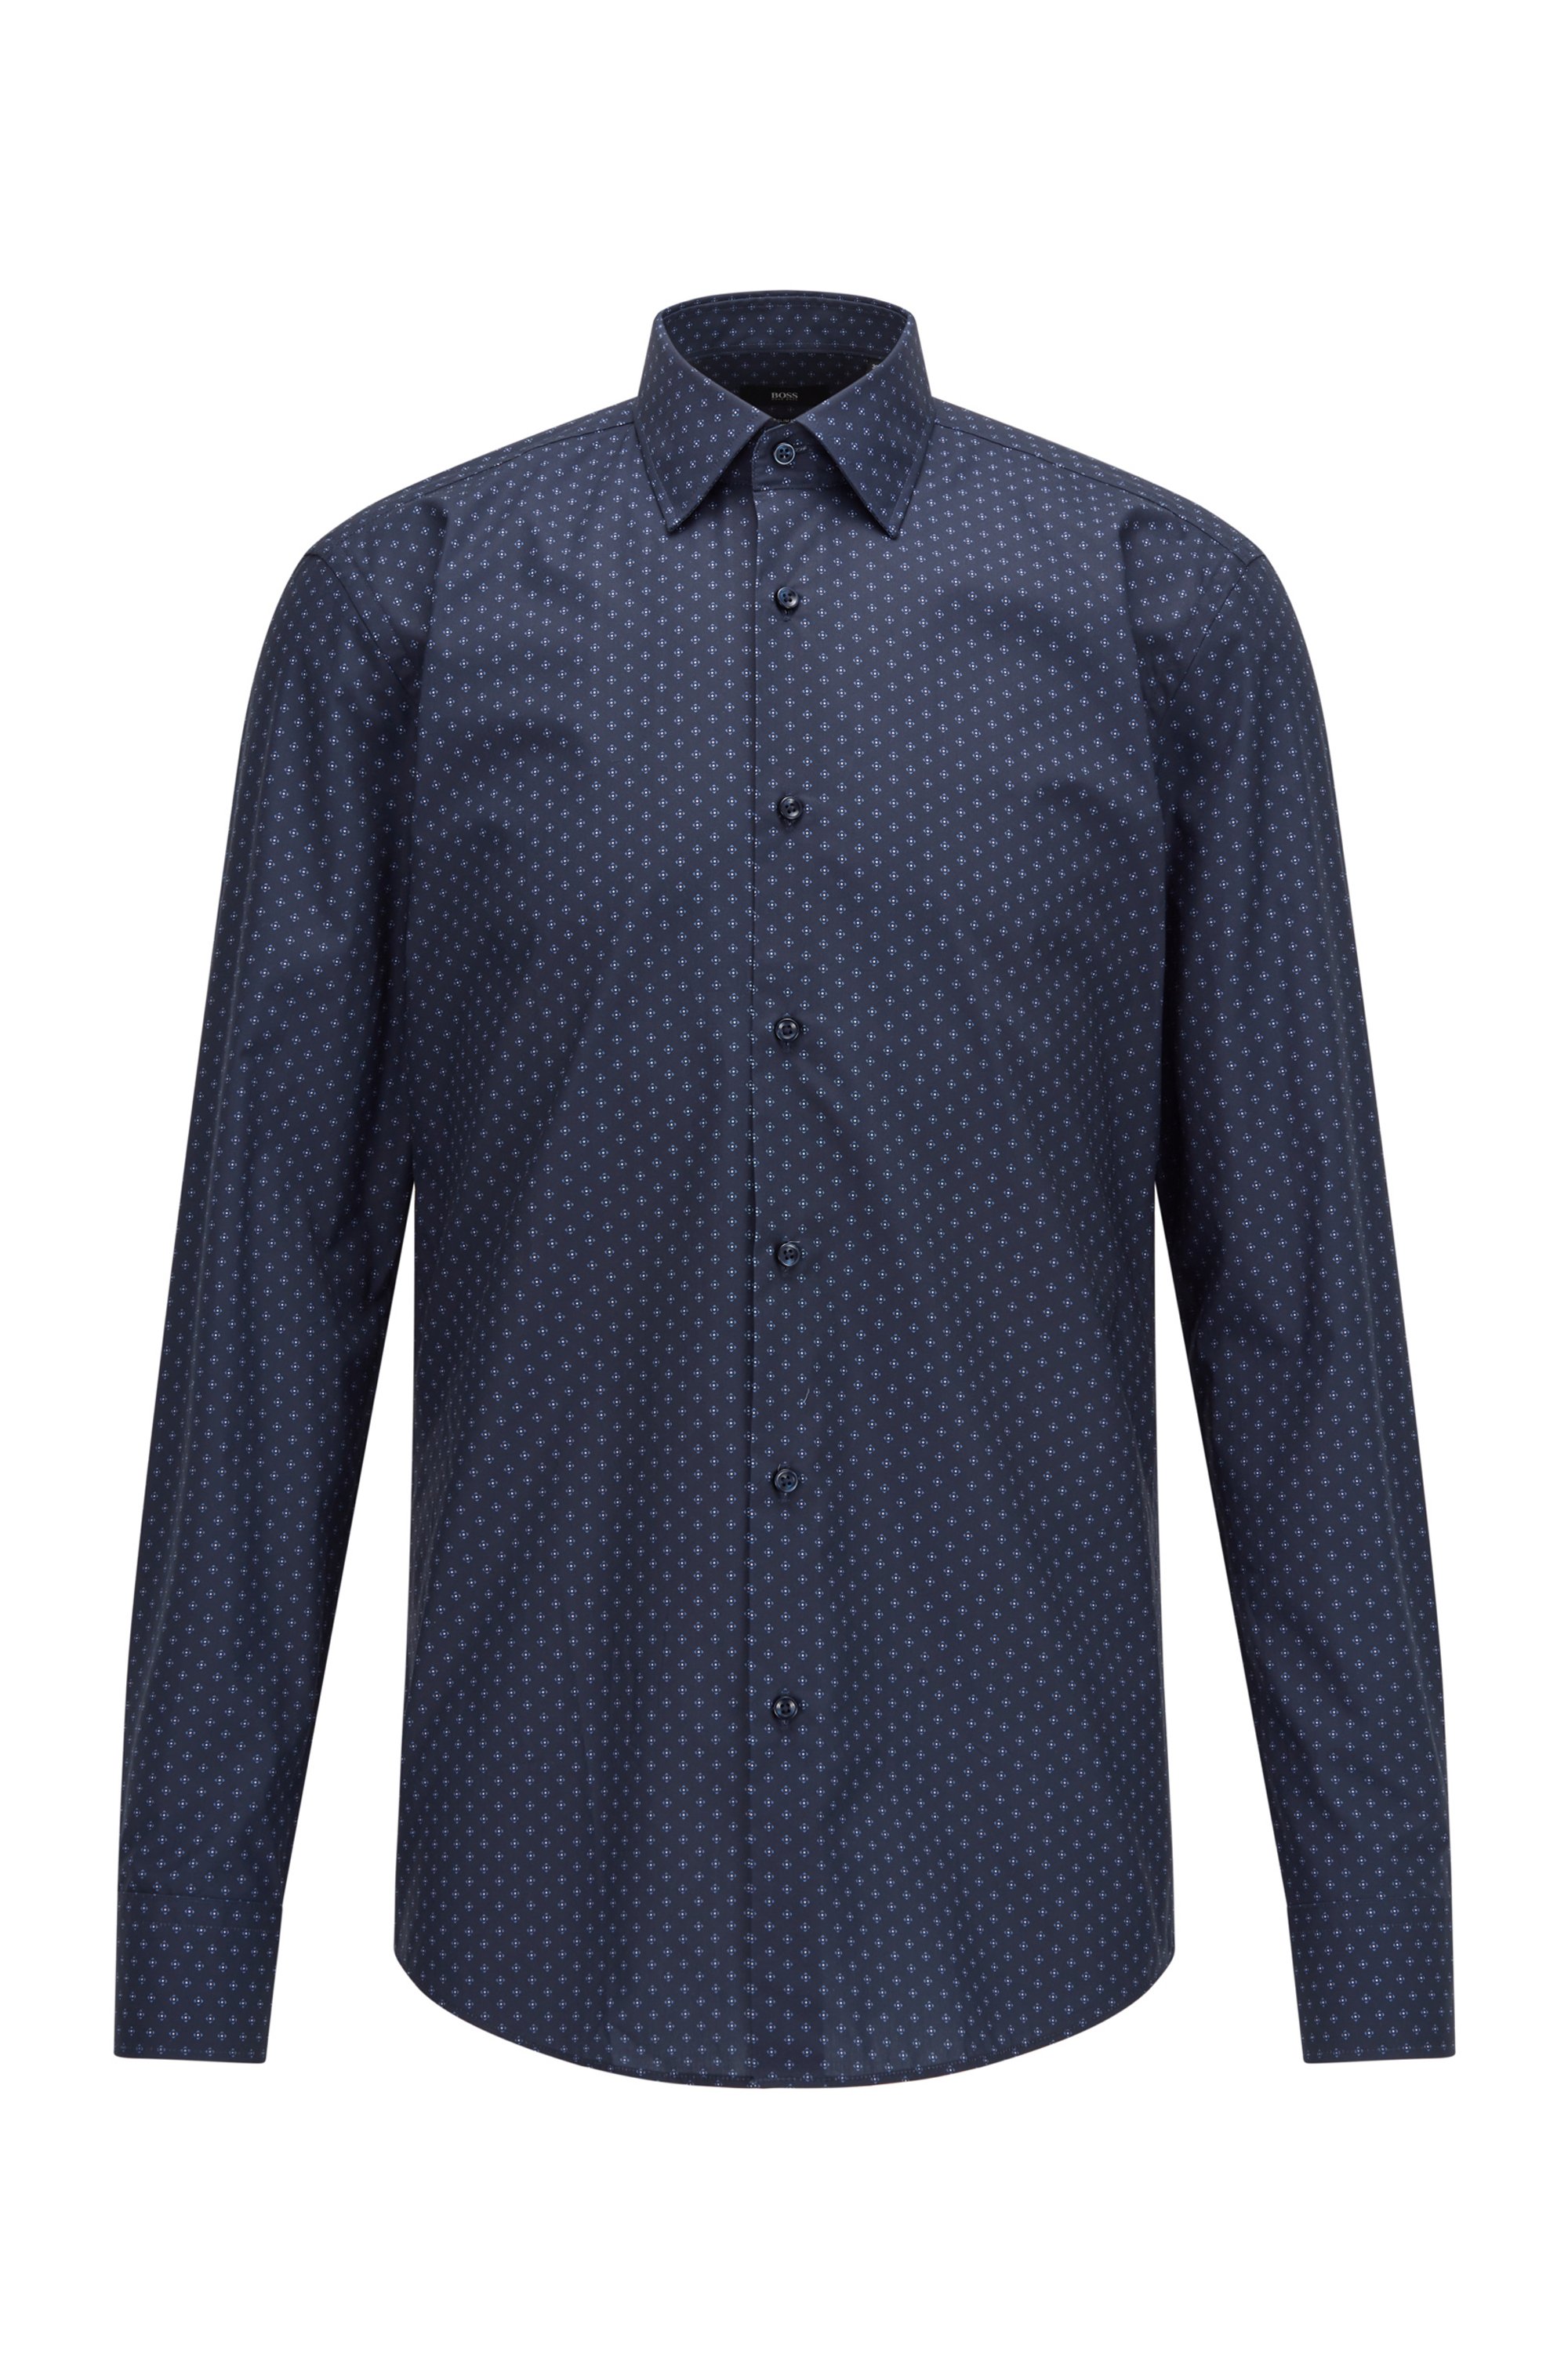 Slim-fit shirt in printed cotton poplin, Dark Blue